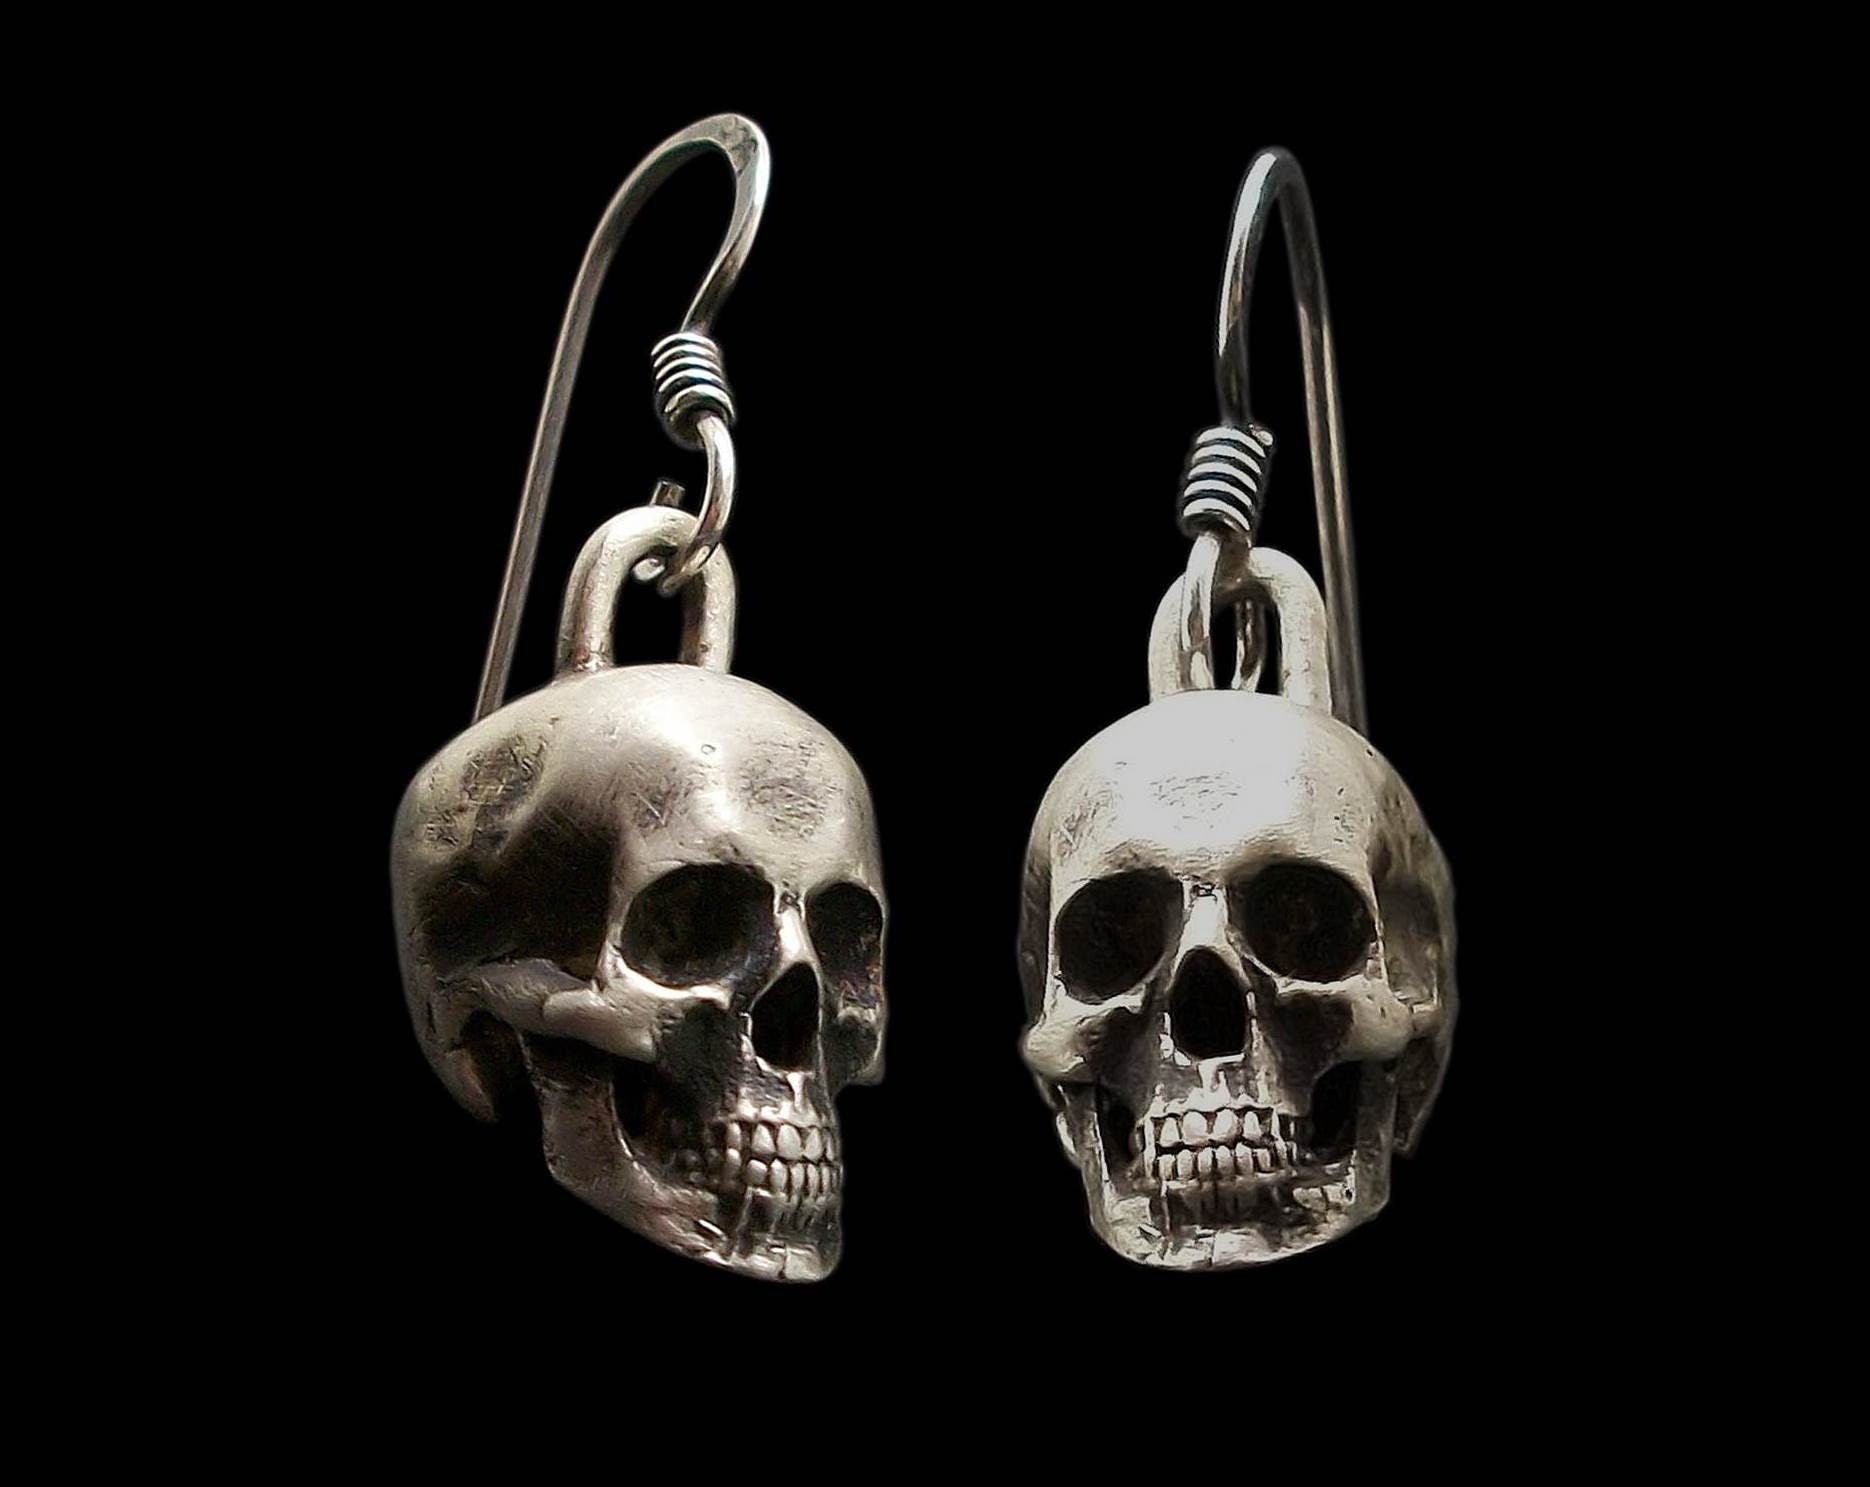 Skull Earrings - Sterling Silver Skull Earrings - Love to Death Earrings (the pair)